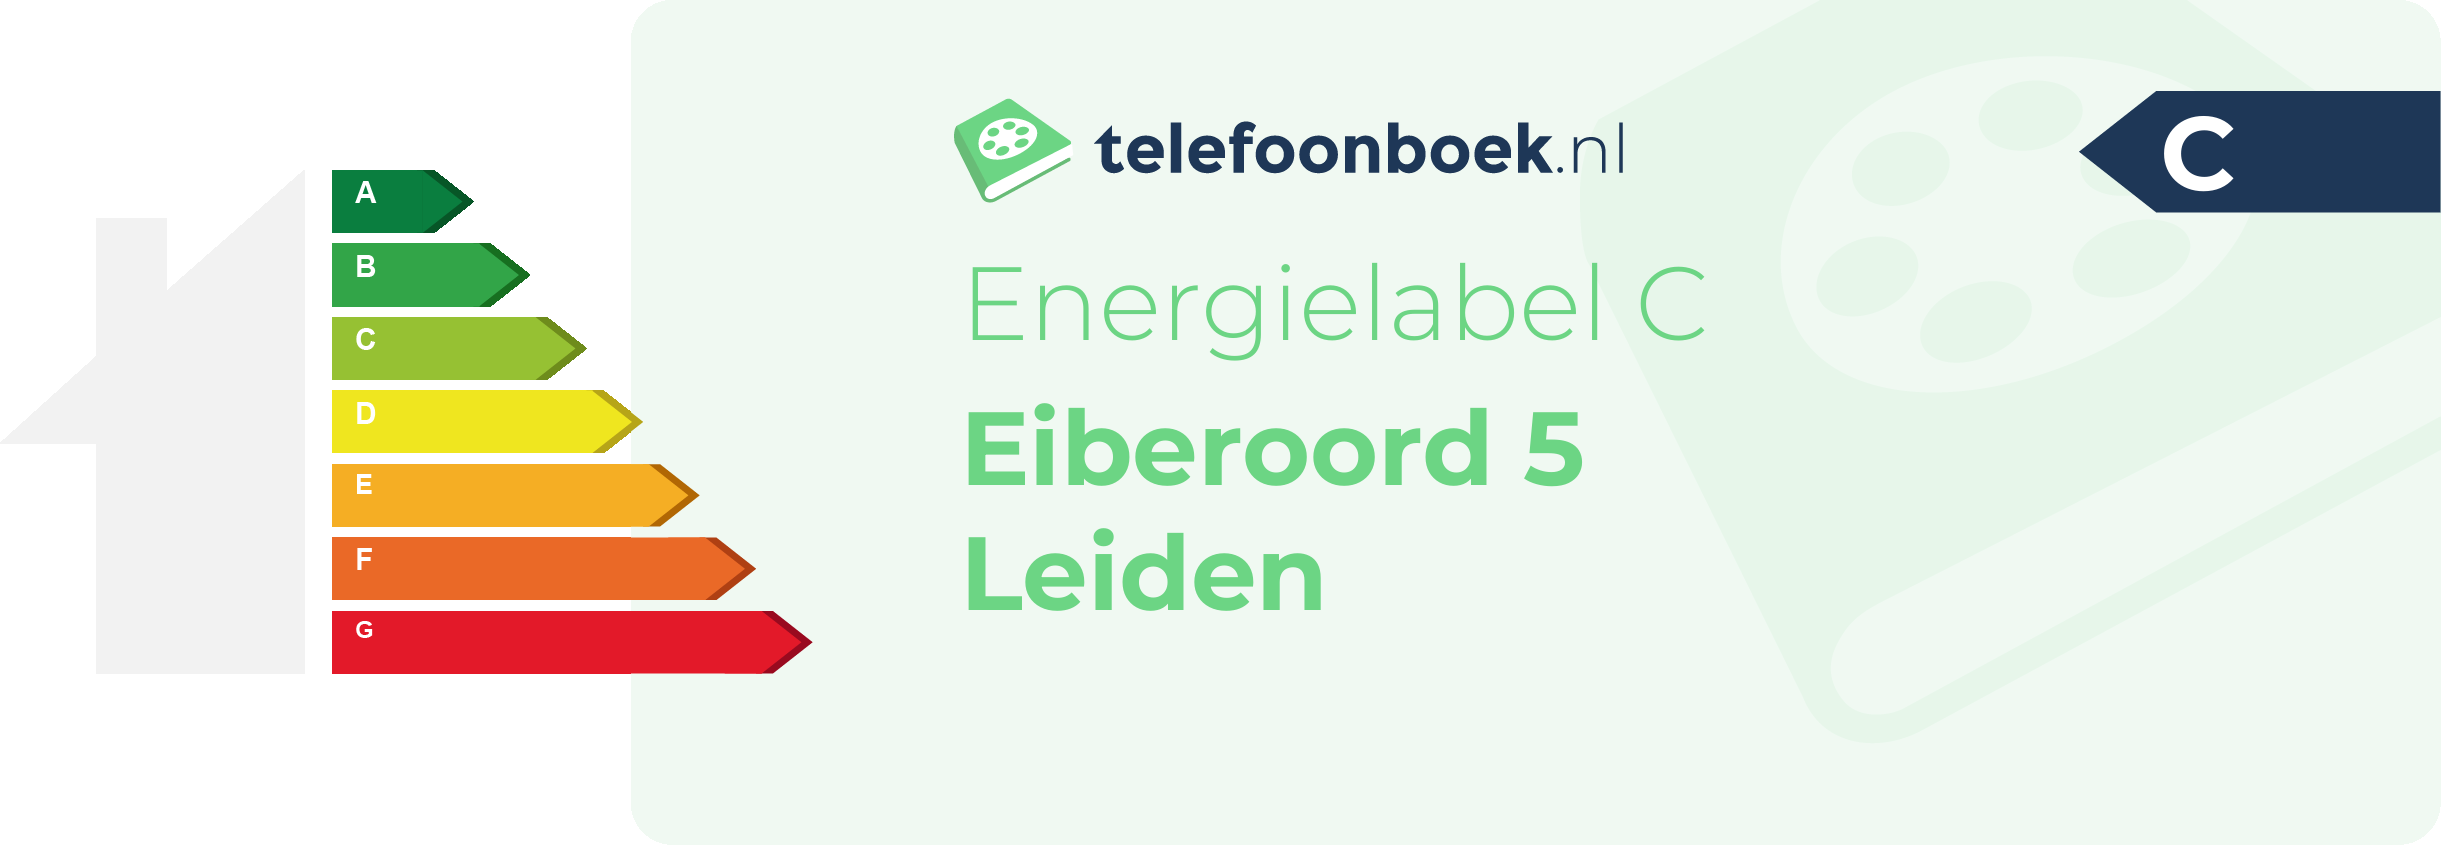 Energielabel Eiberoord 5 Leiden